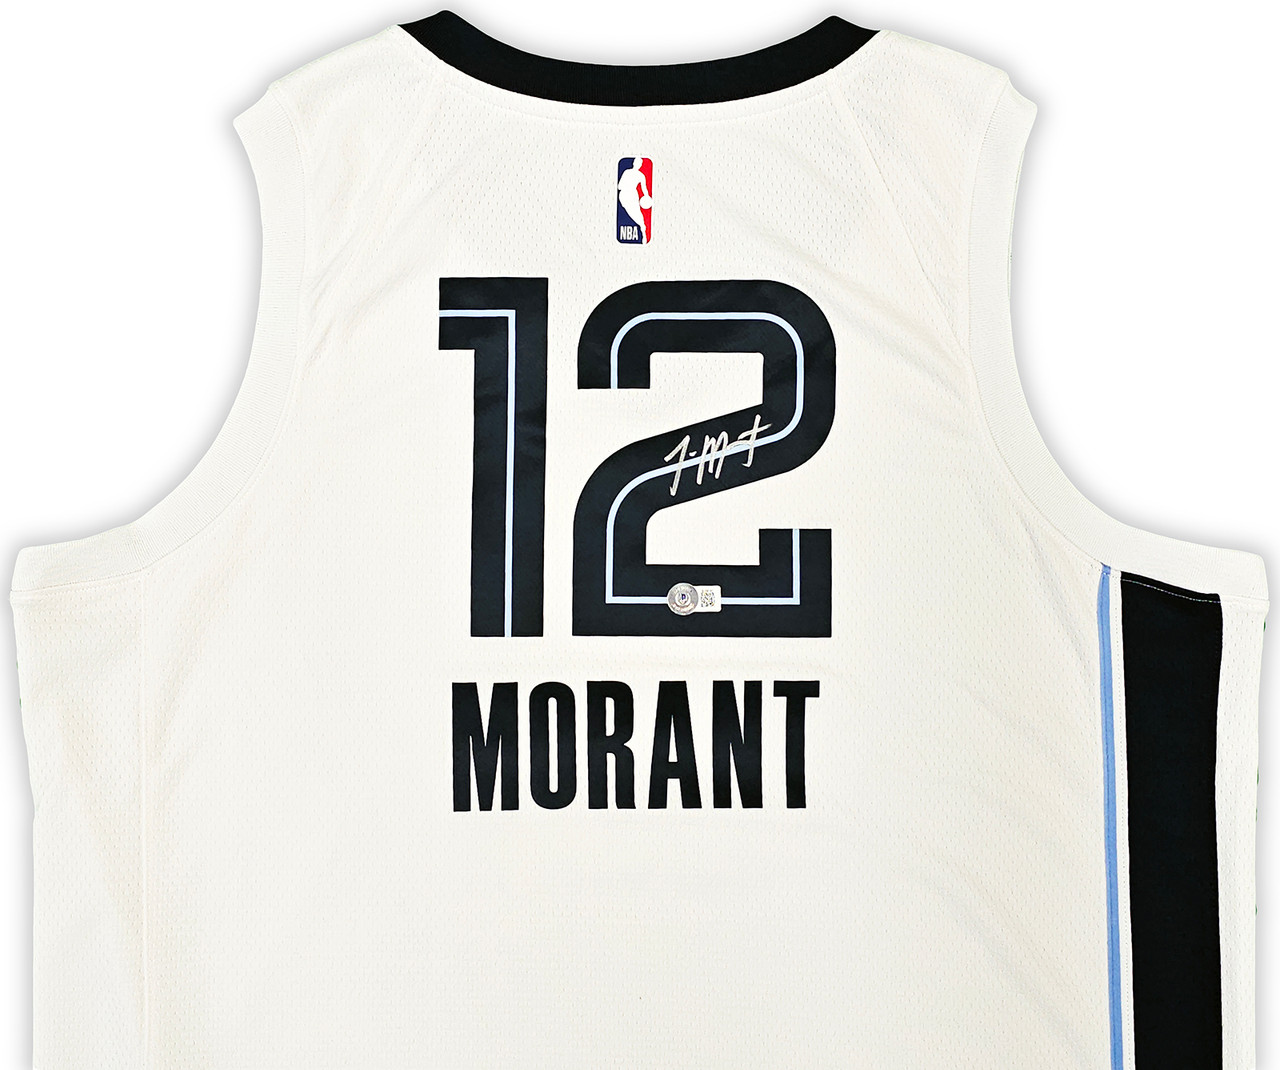 Ja Morant Autographed Memphis Grizzlies Jersey signed Nike 52